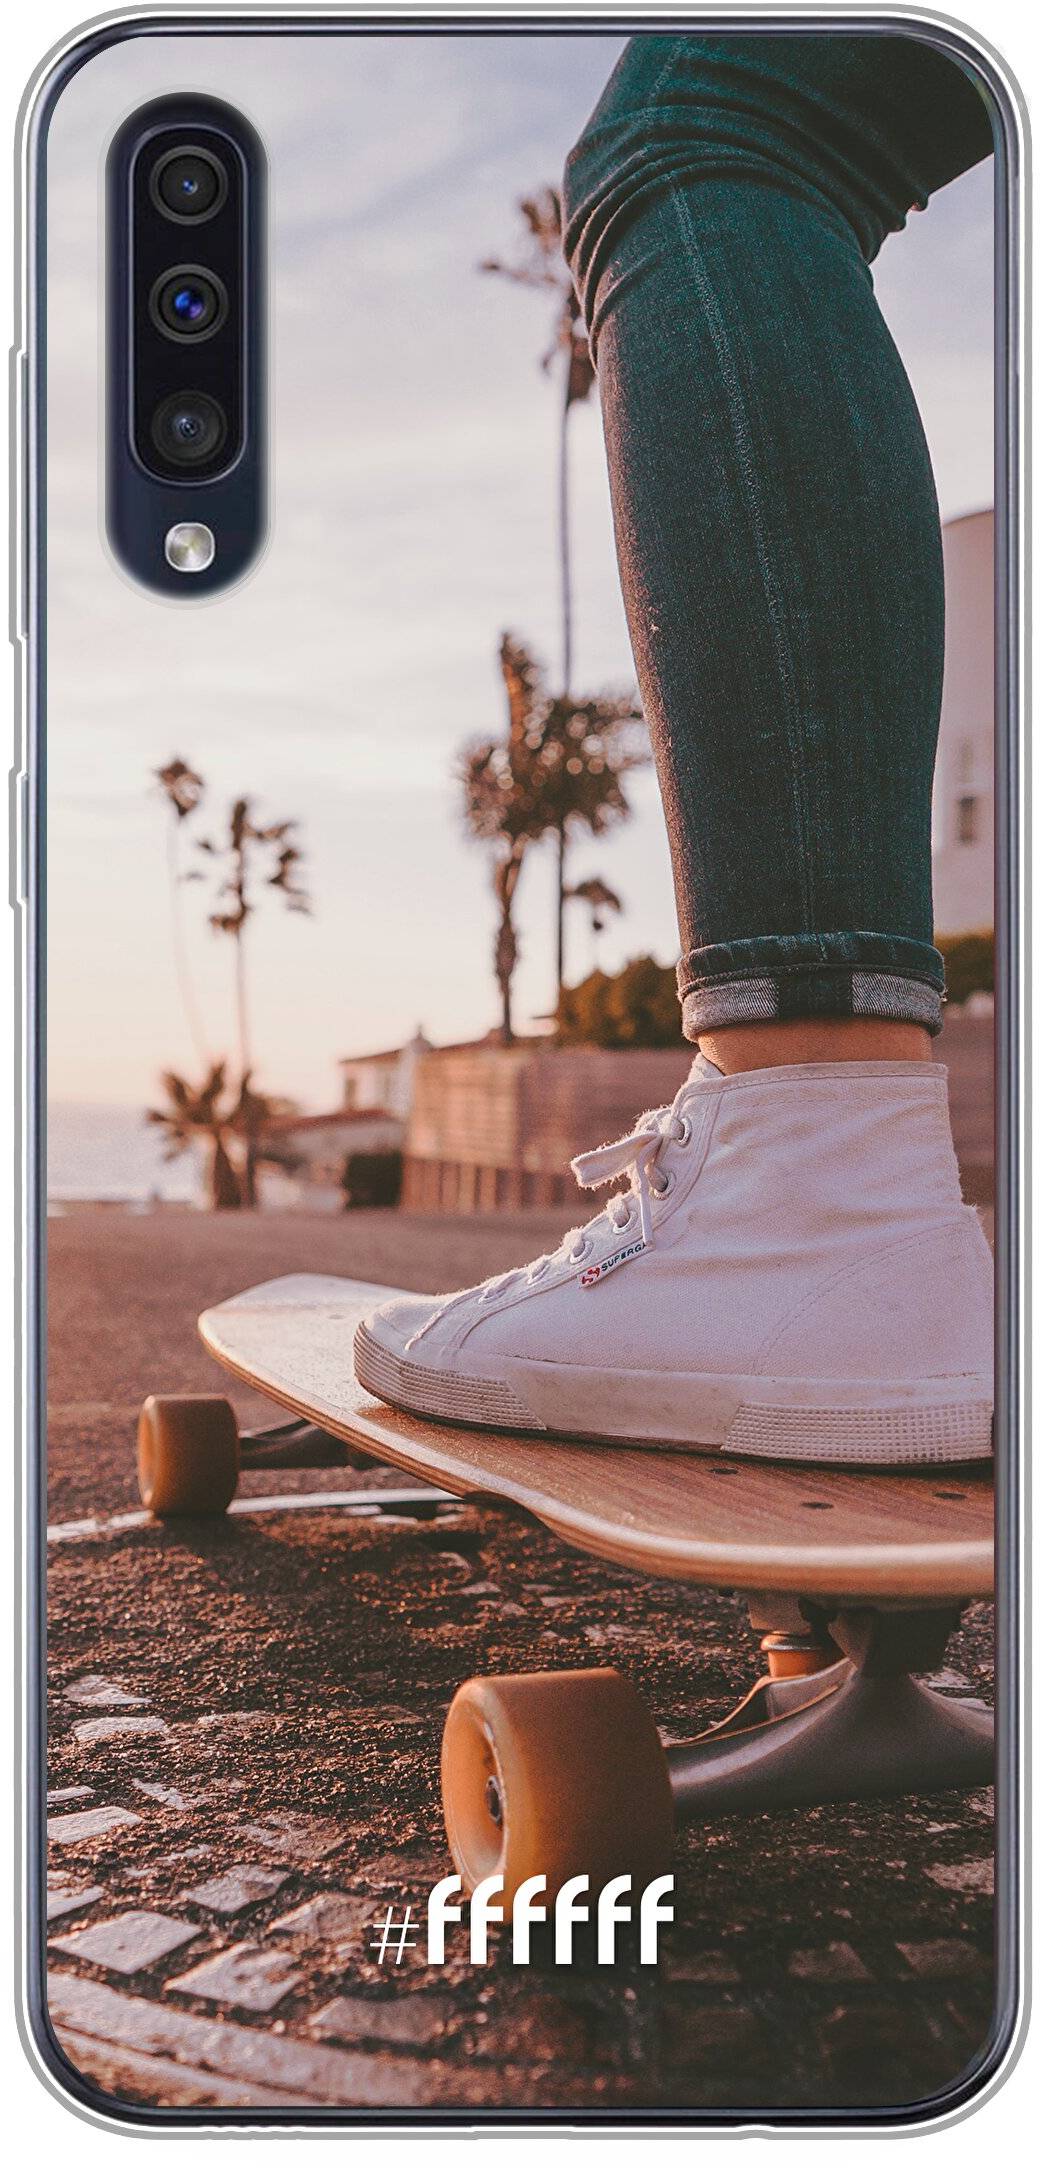 Skateboarding Galaxy A50s